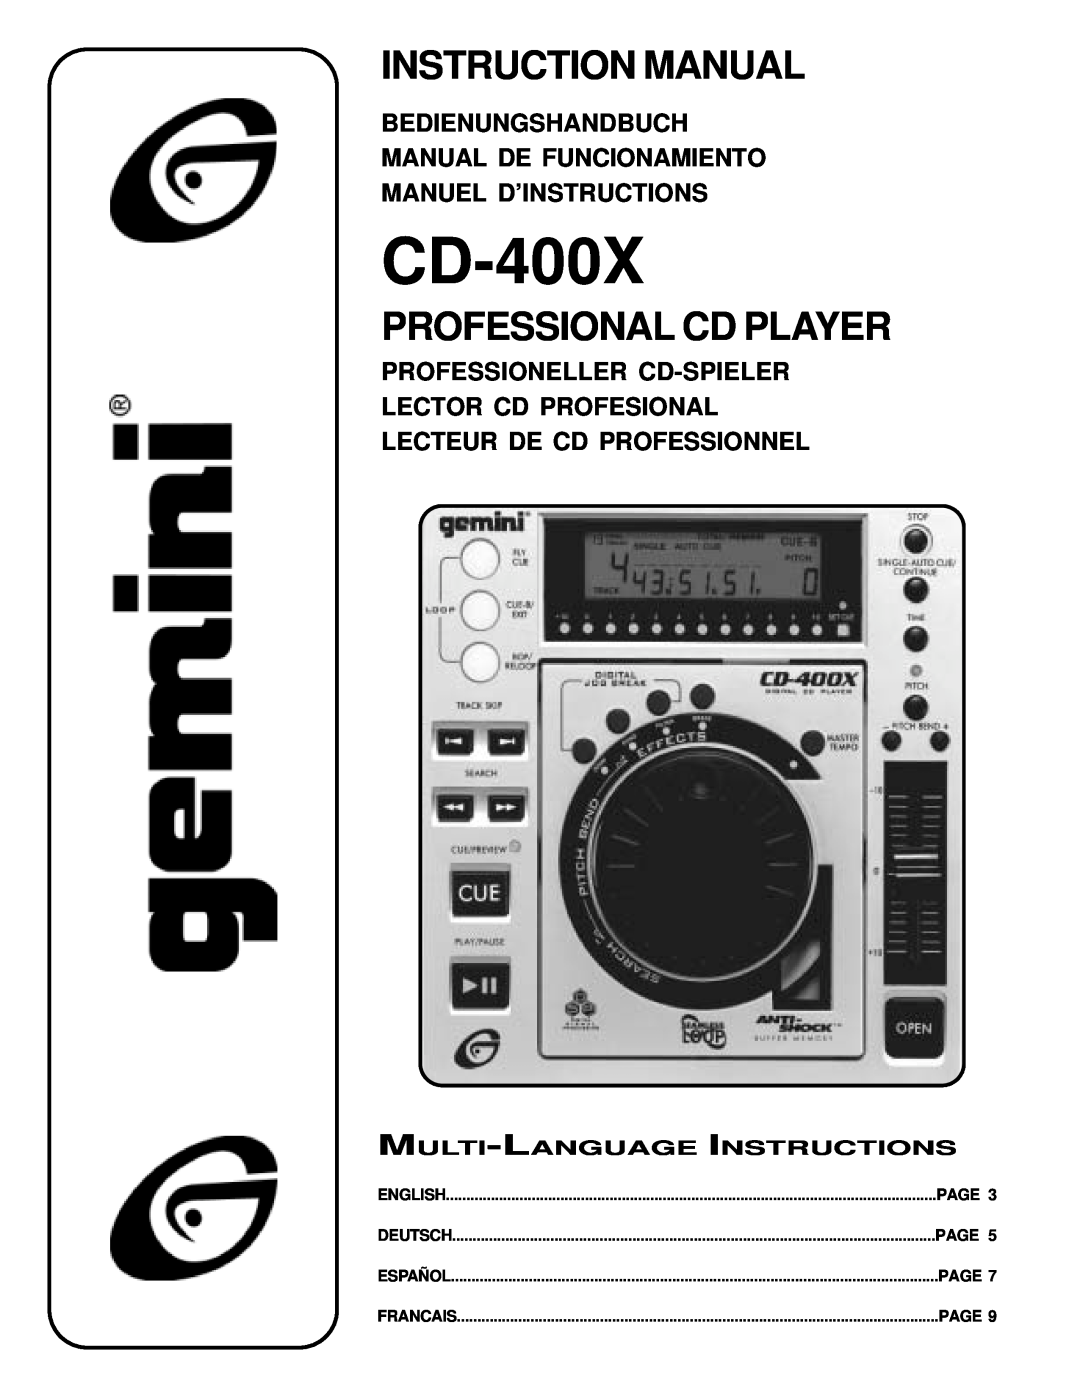 Gemini CD-400X instruction manual Bedienungshandbuch Manual De Funcionamiento, Manuel D’Instructions, English, Page 